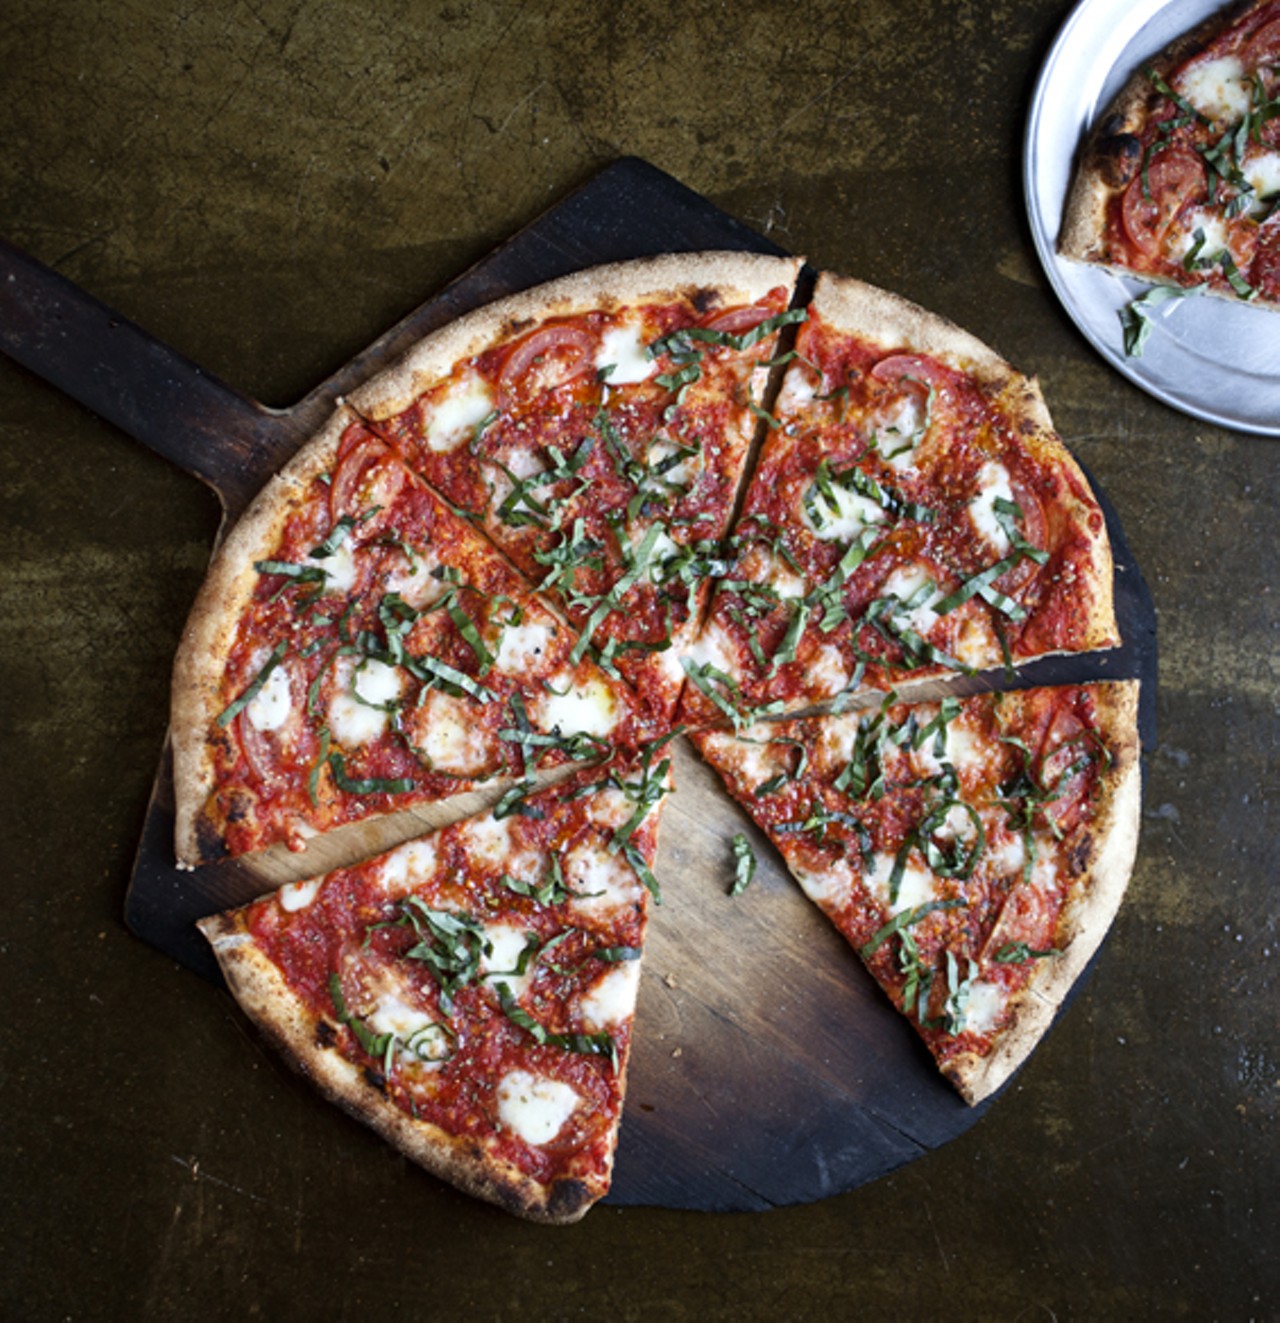 The Margherita pizza has tomato sauce, fresh mozzarella and basil.